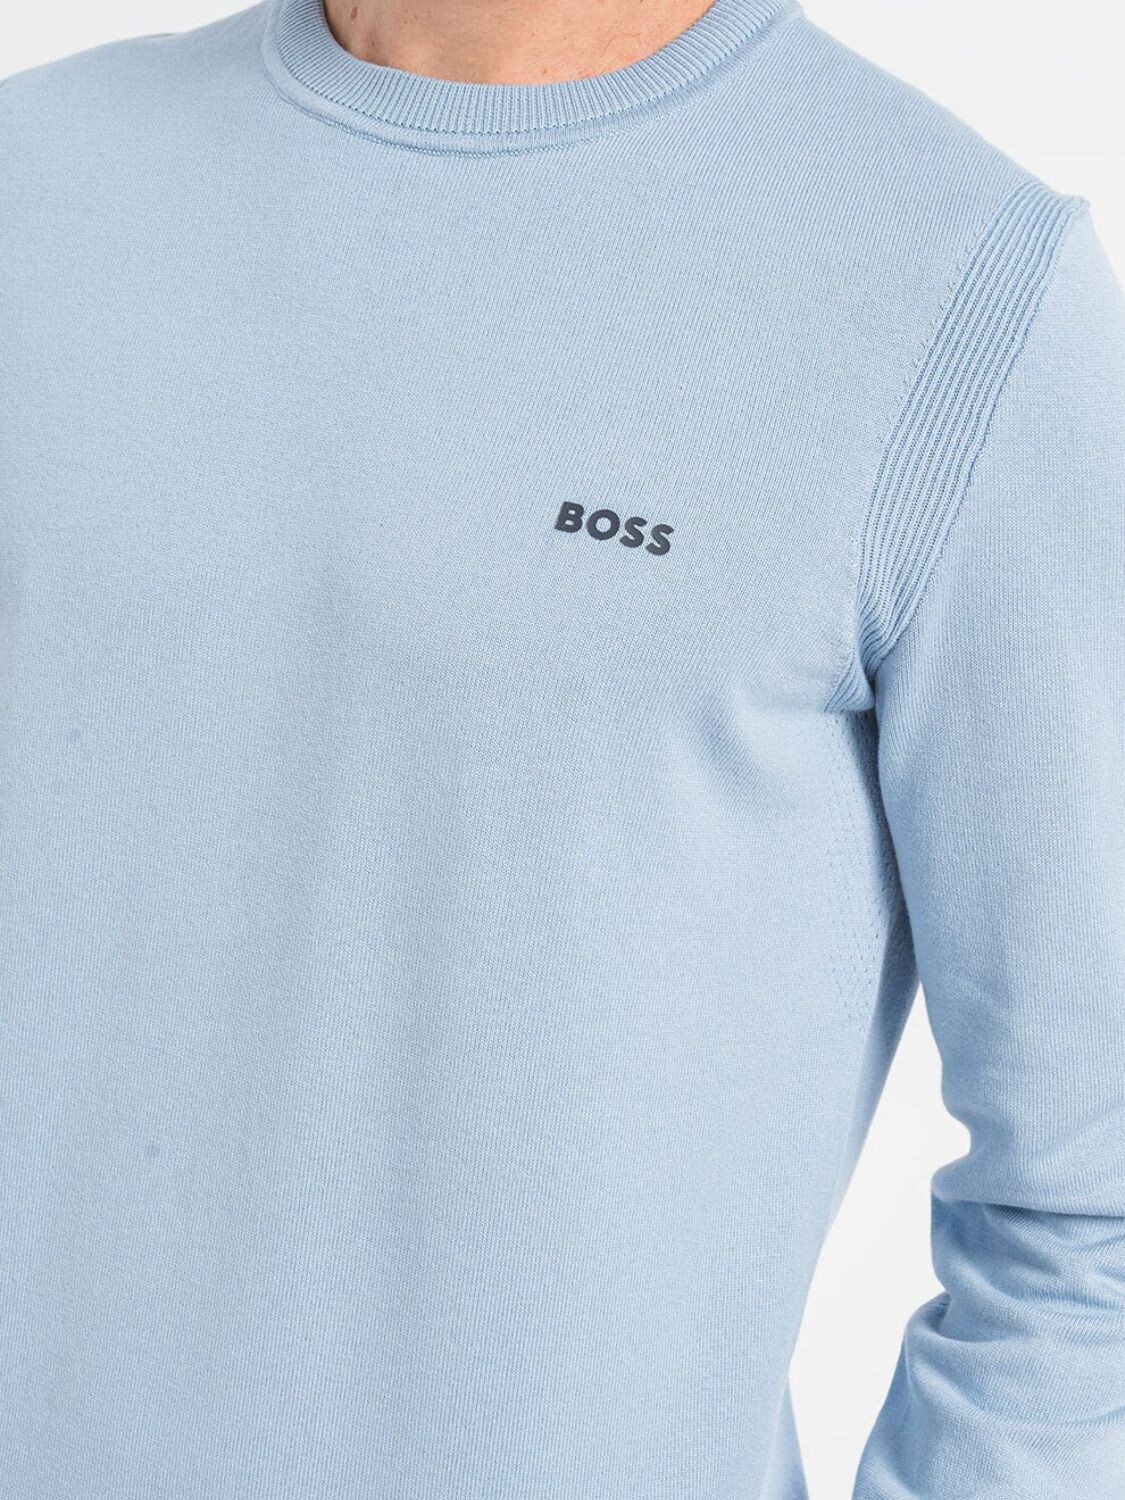 Hugo Boss -Buzo de punto con cuello a la base, regular fit , EVER-X Celeste